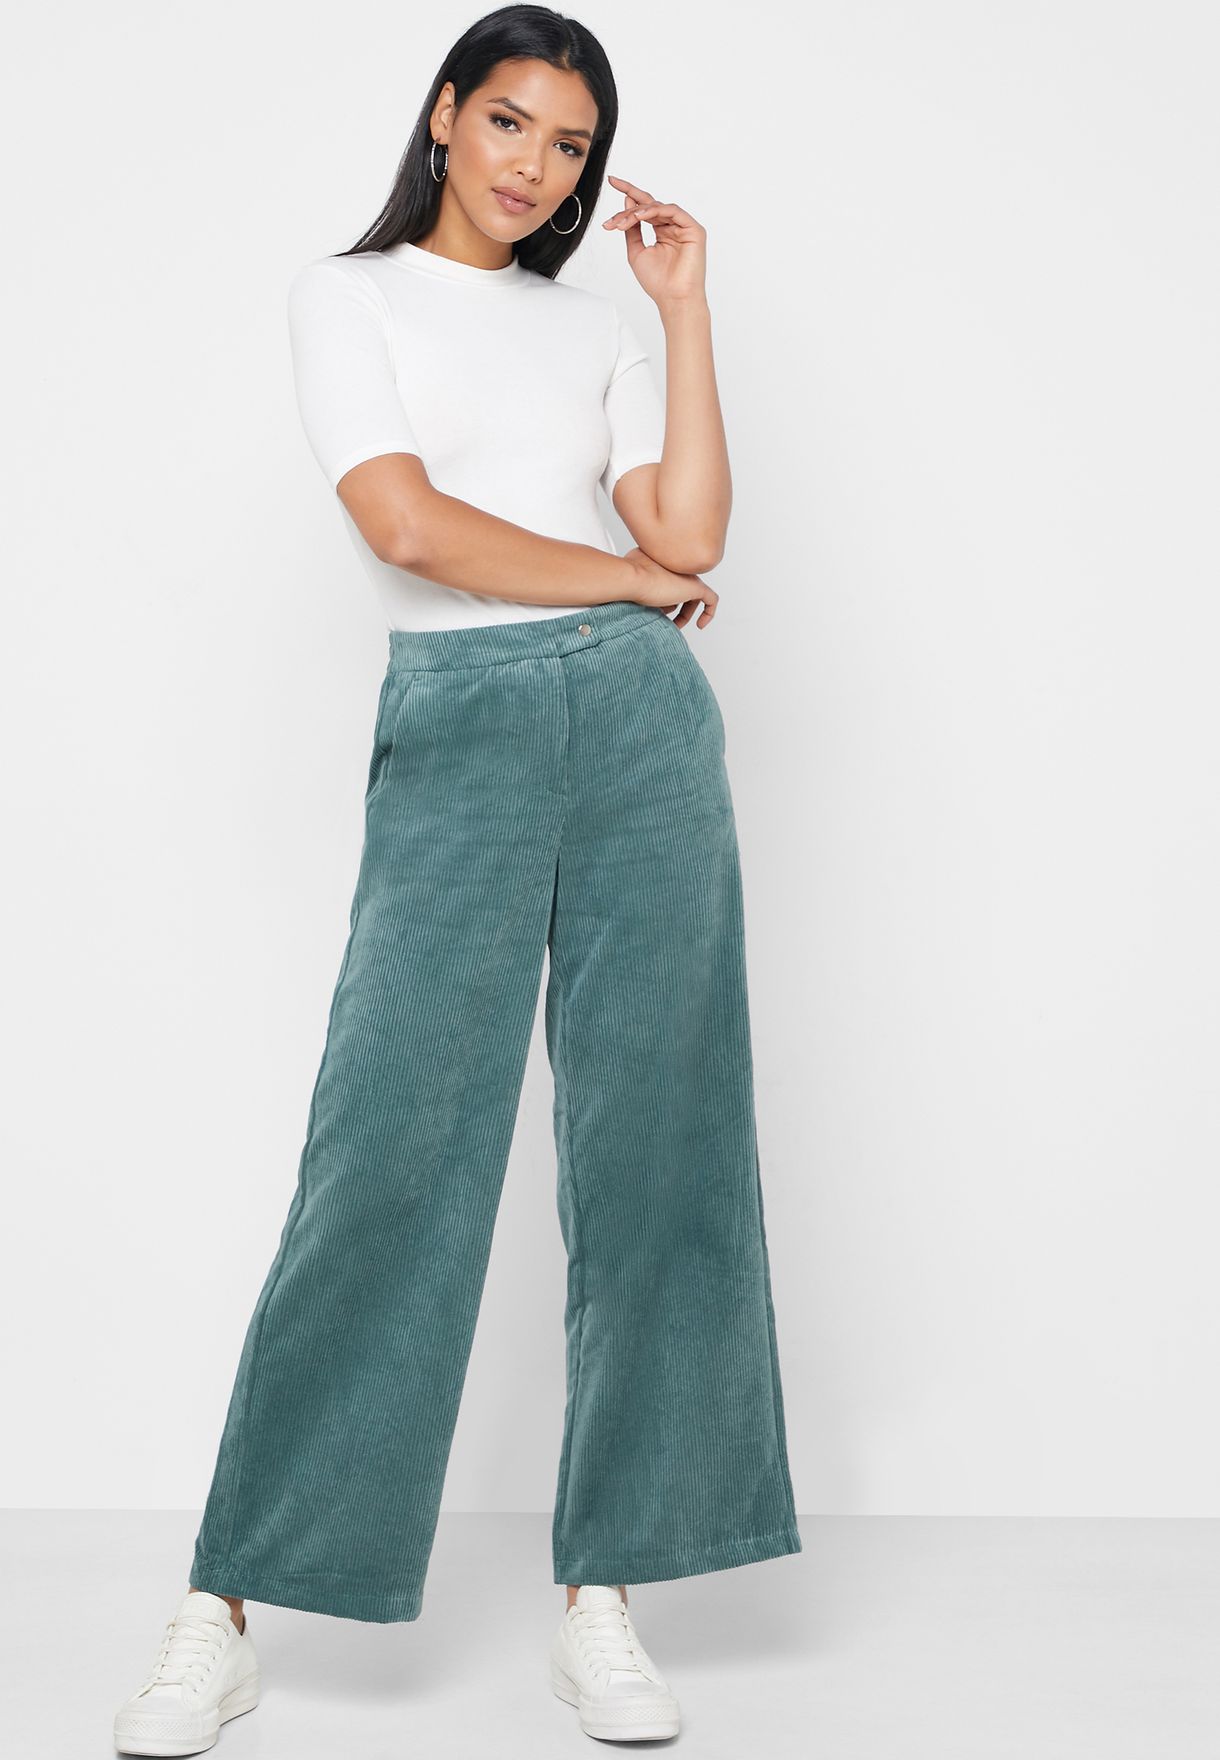 discount 62% Vero Moda Chino trouser Green M WOMEN FASHION Trousers Elegant 